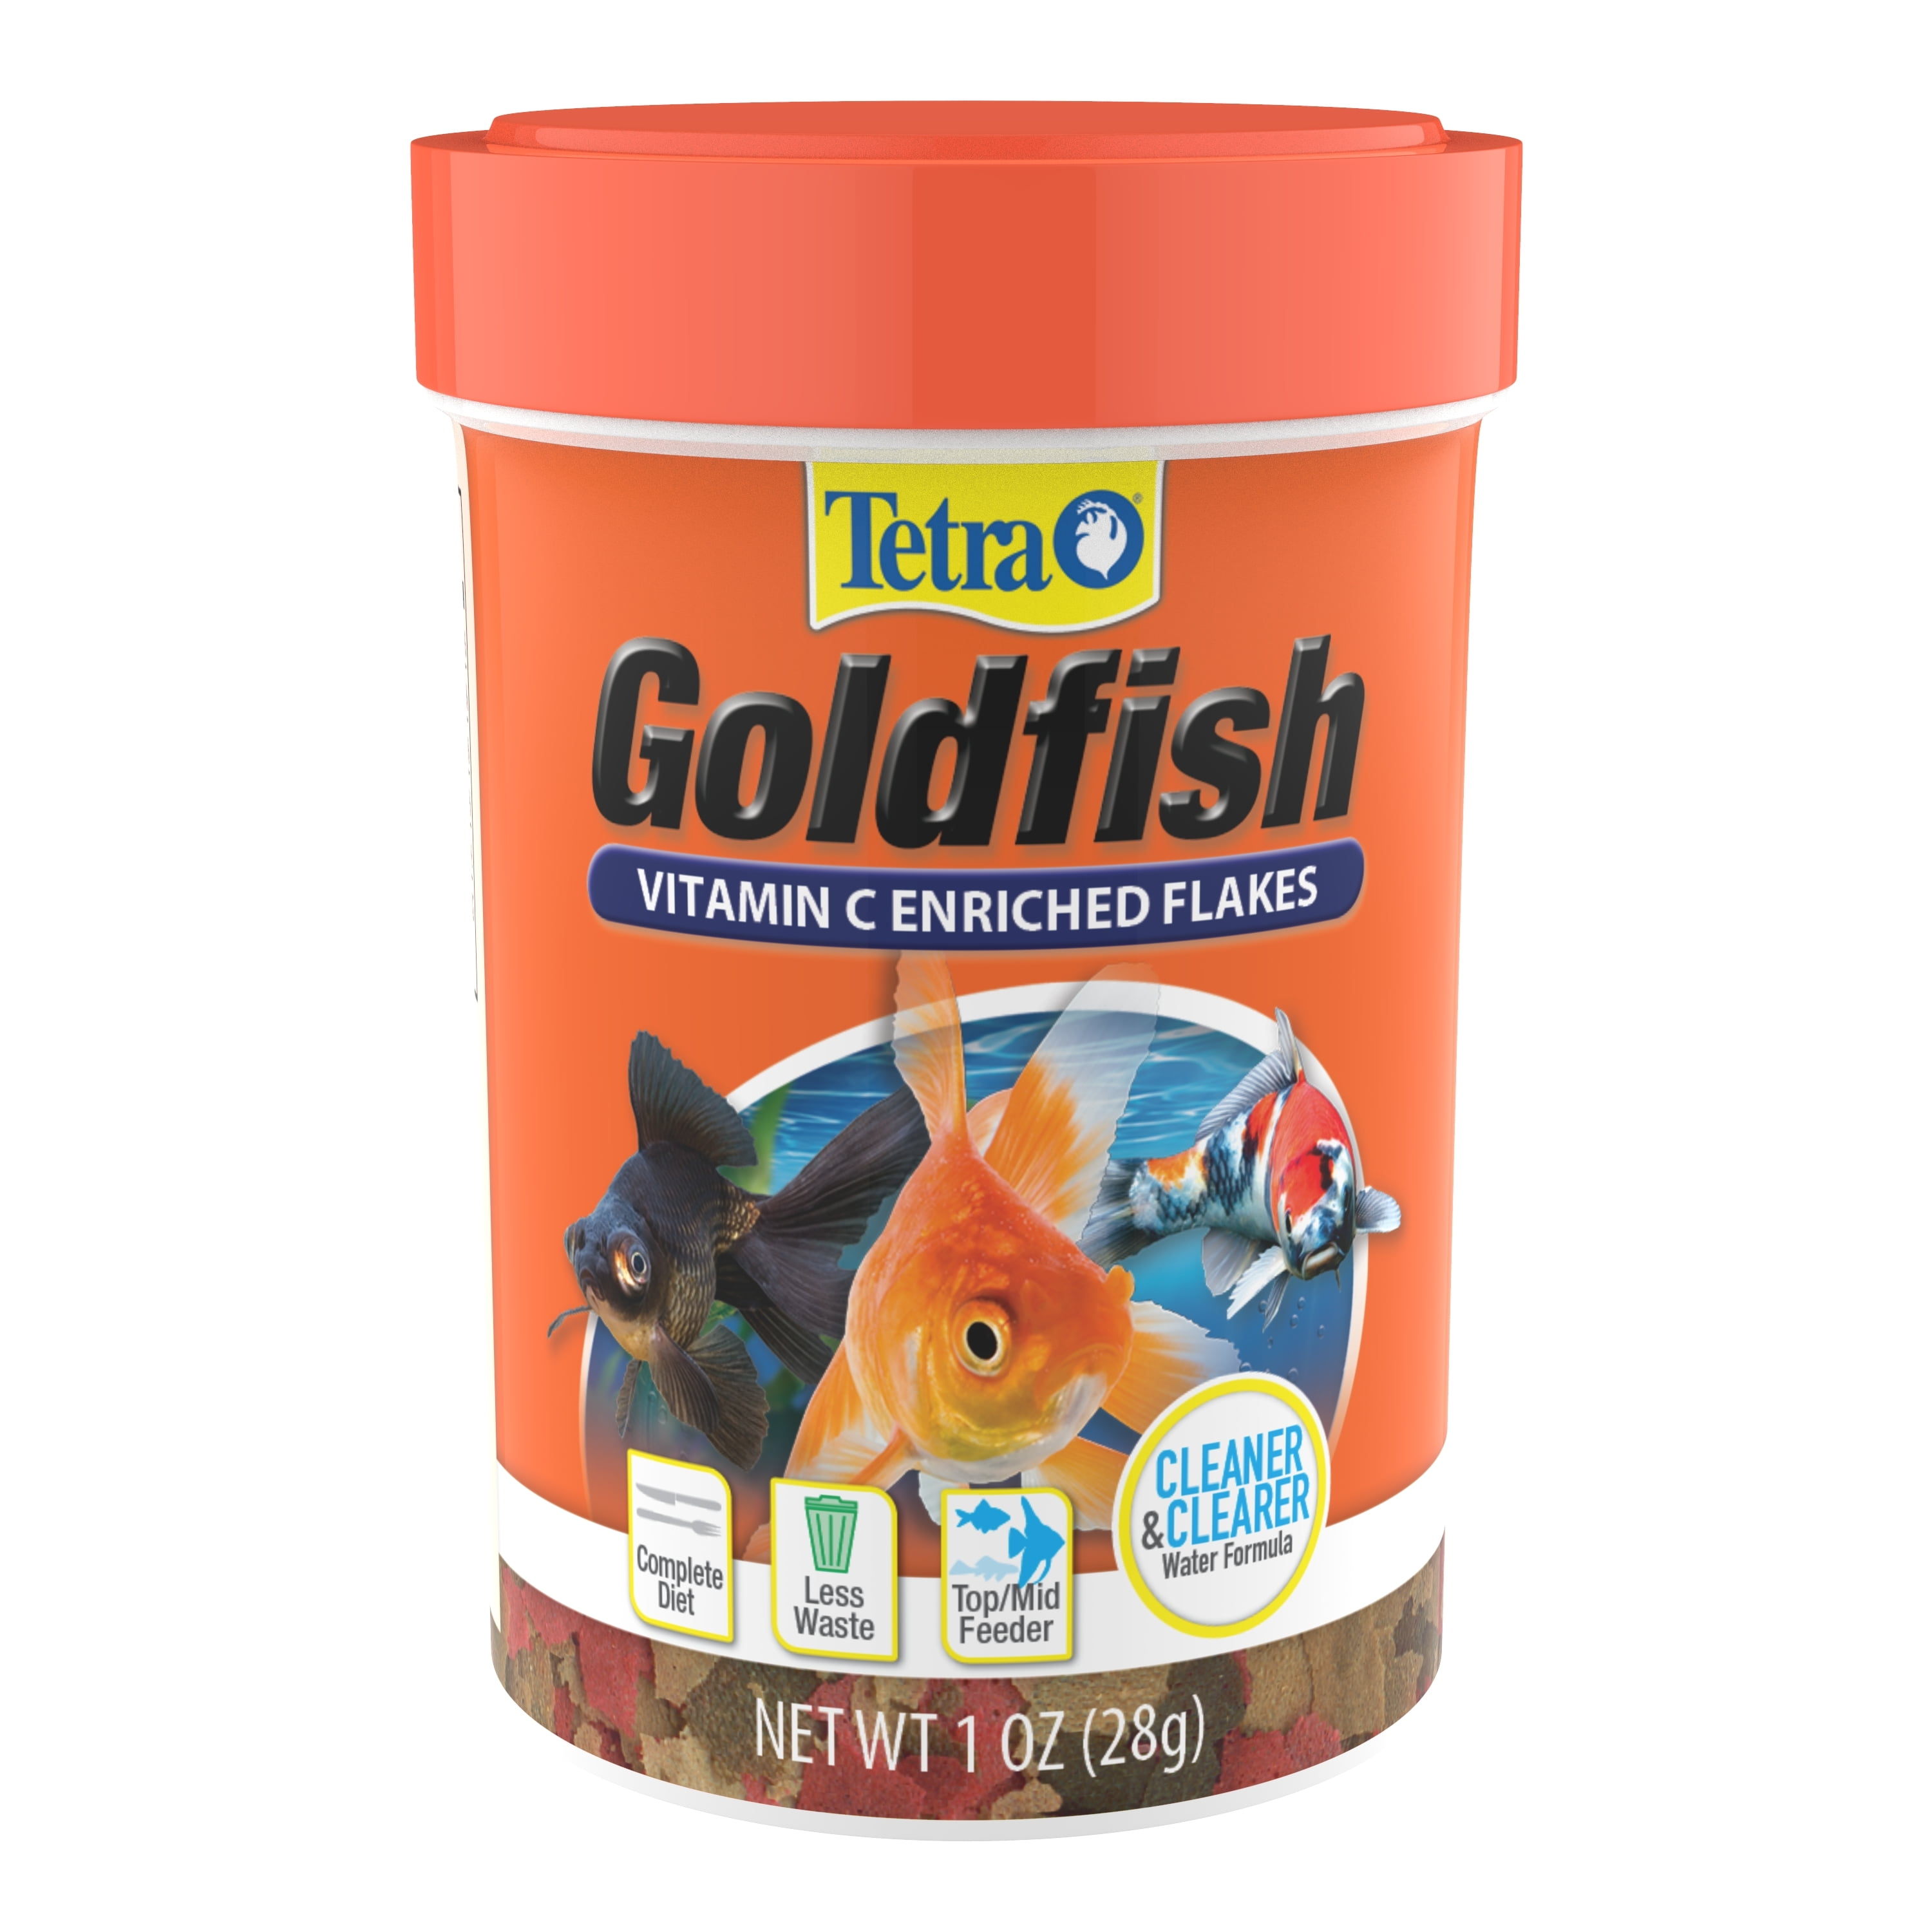 Tetra Goldfish Vitamin C Enriched Fish Food Flakes, 1 oz 